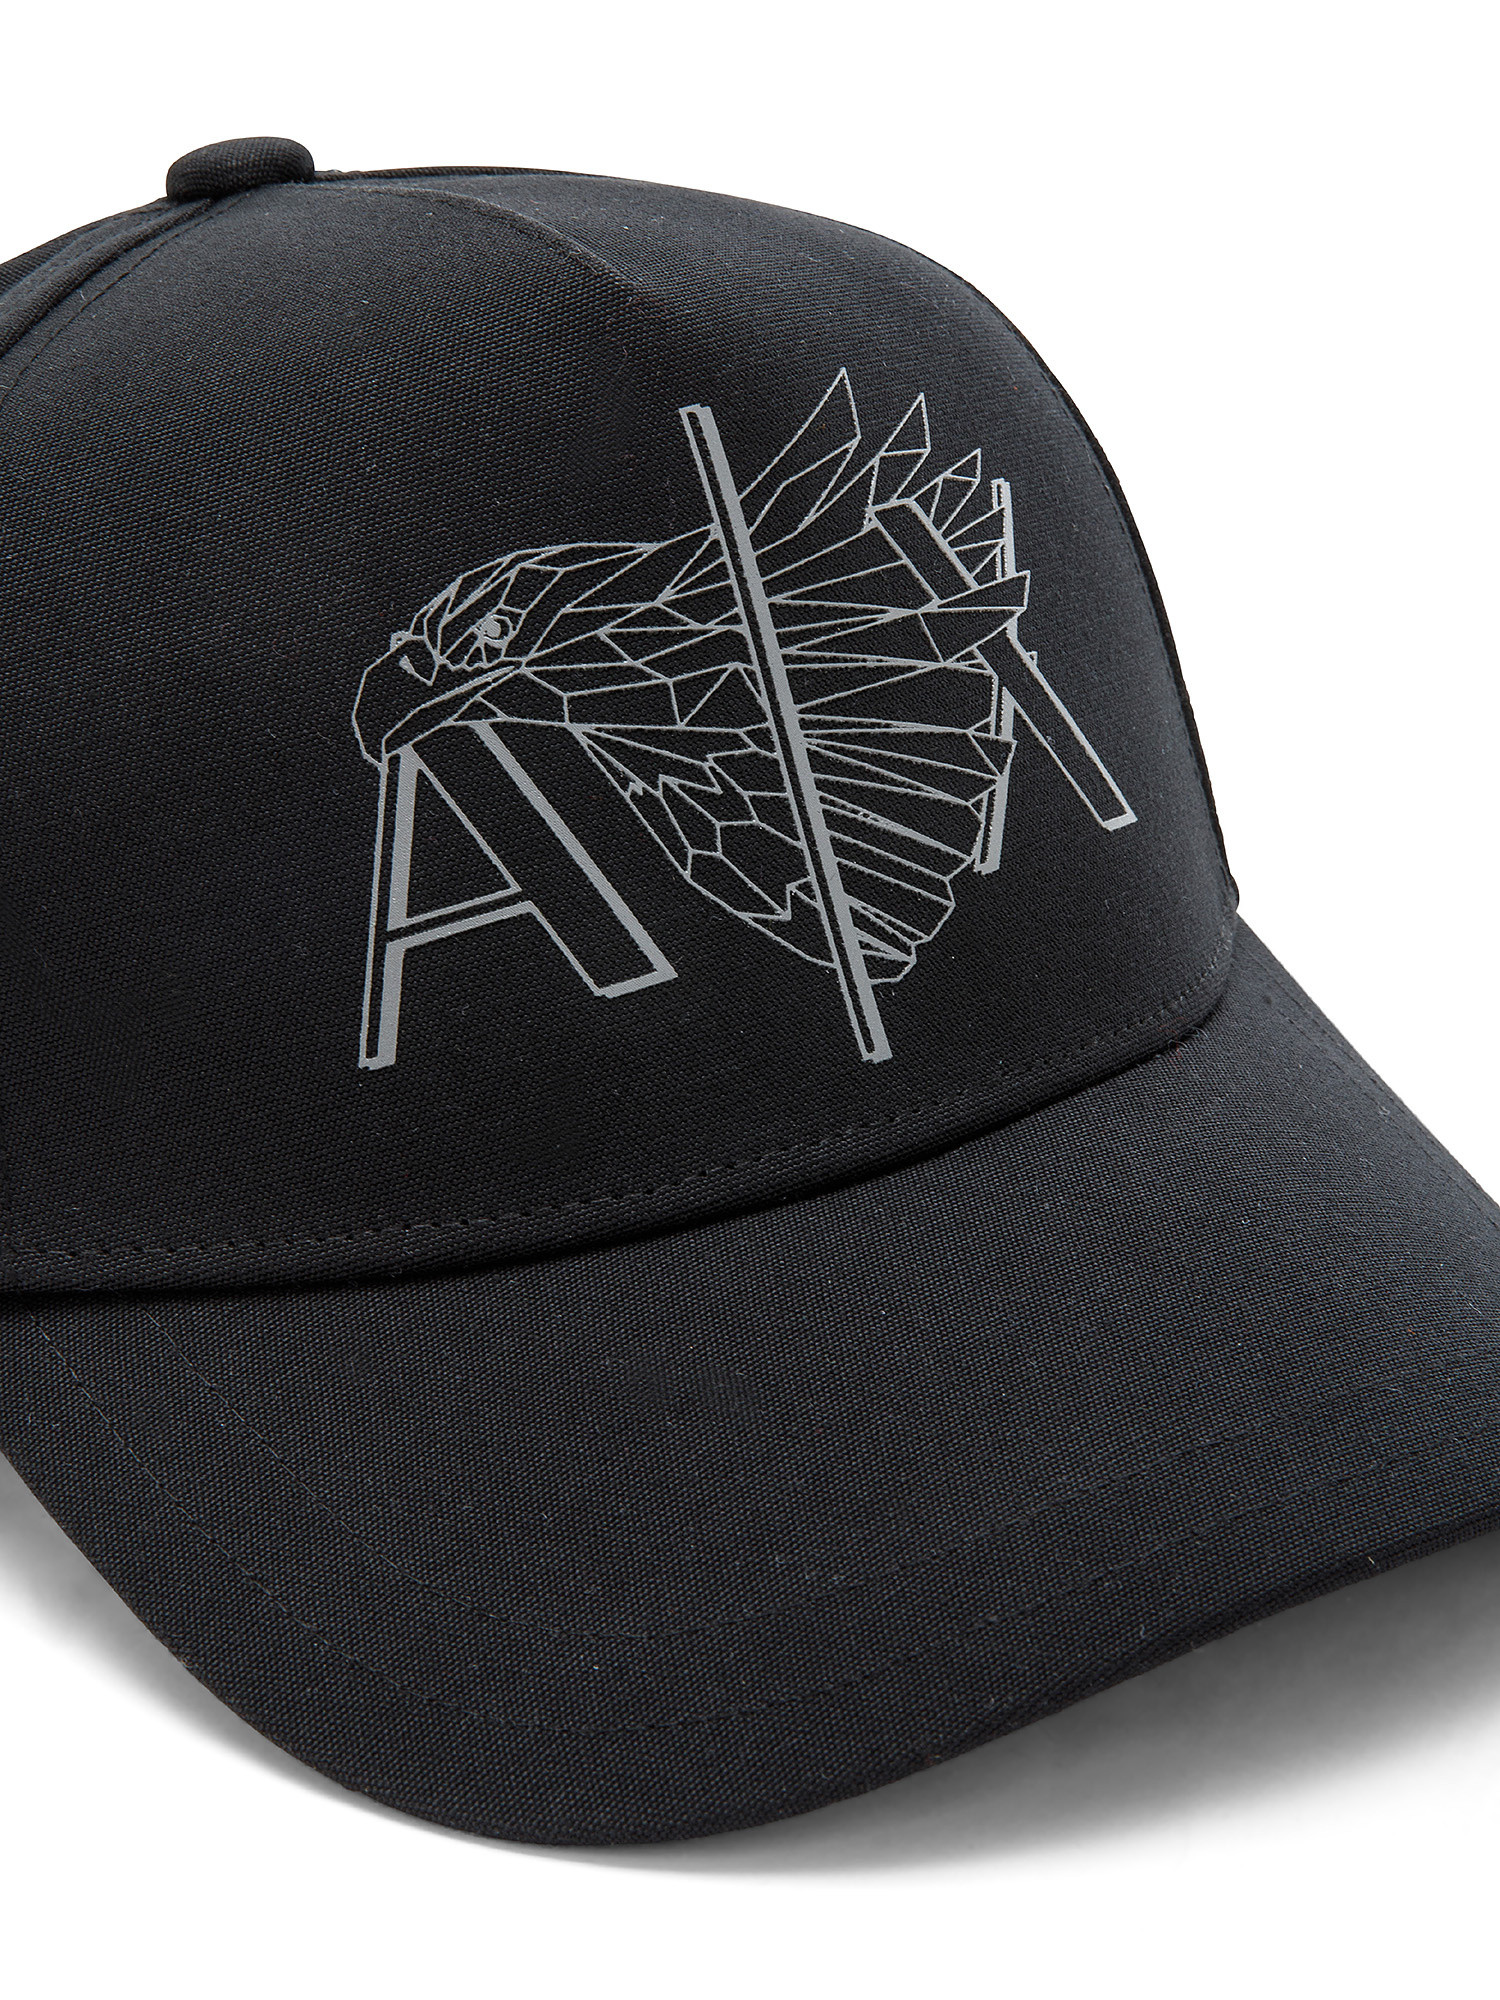 Armani Exchange - Baseball cap with logo, Black, large image number 1